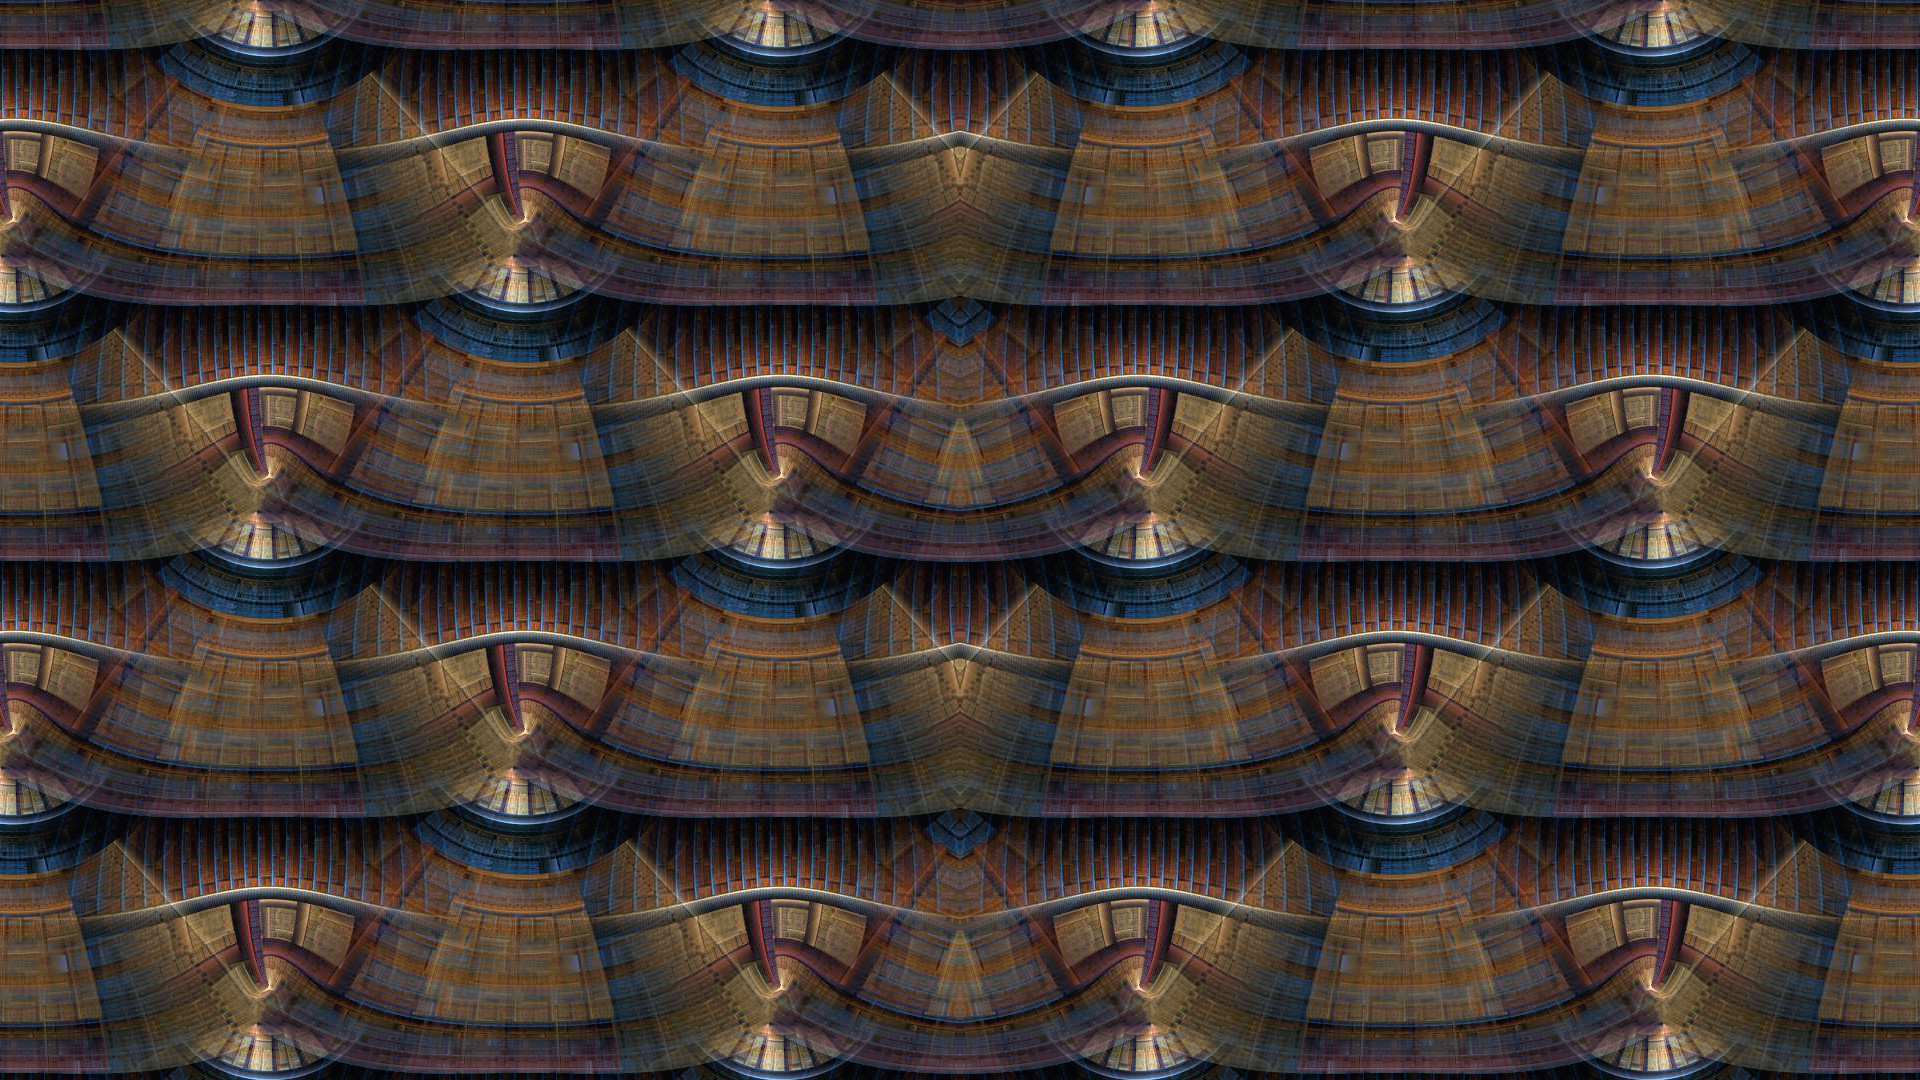 Abstract Fractal Pattern Symmetry Digital Art 3D Fractal 1920x1080